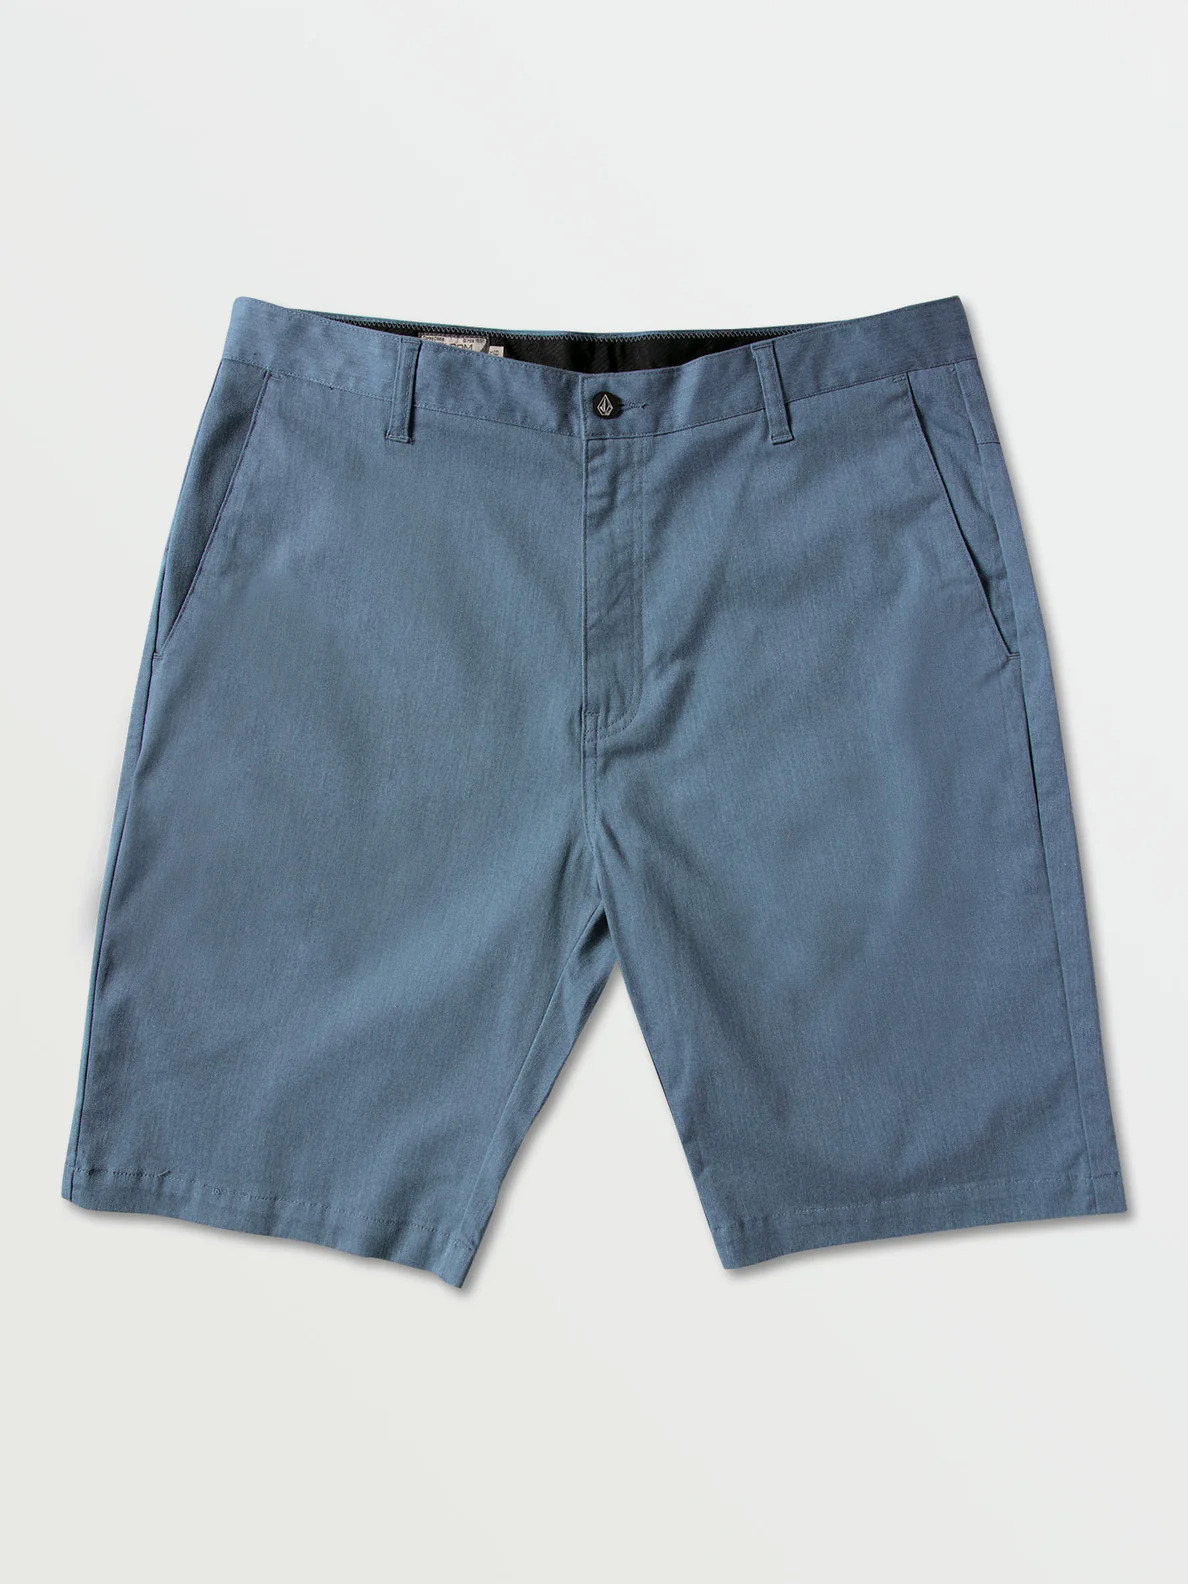 Volcom Vmonty Stretch Shorts & Kerosene Hybrid Shorts (Various Colors), 2 for $34